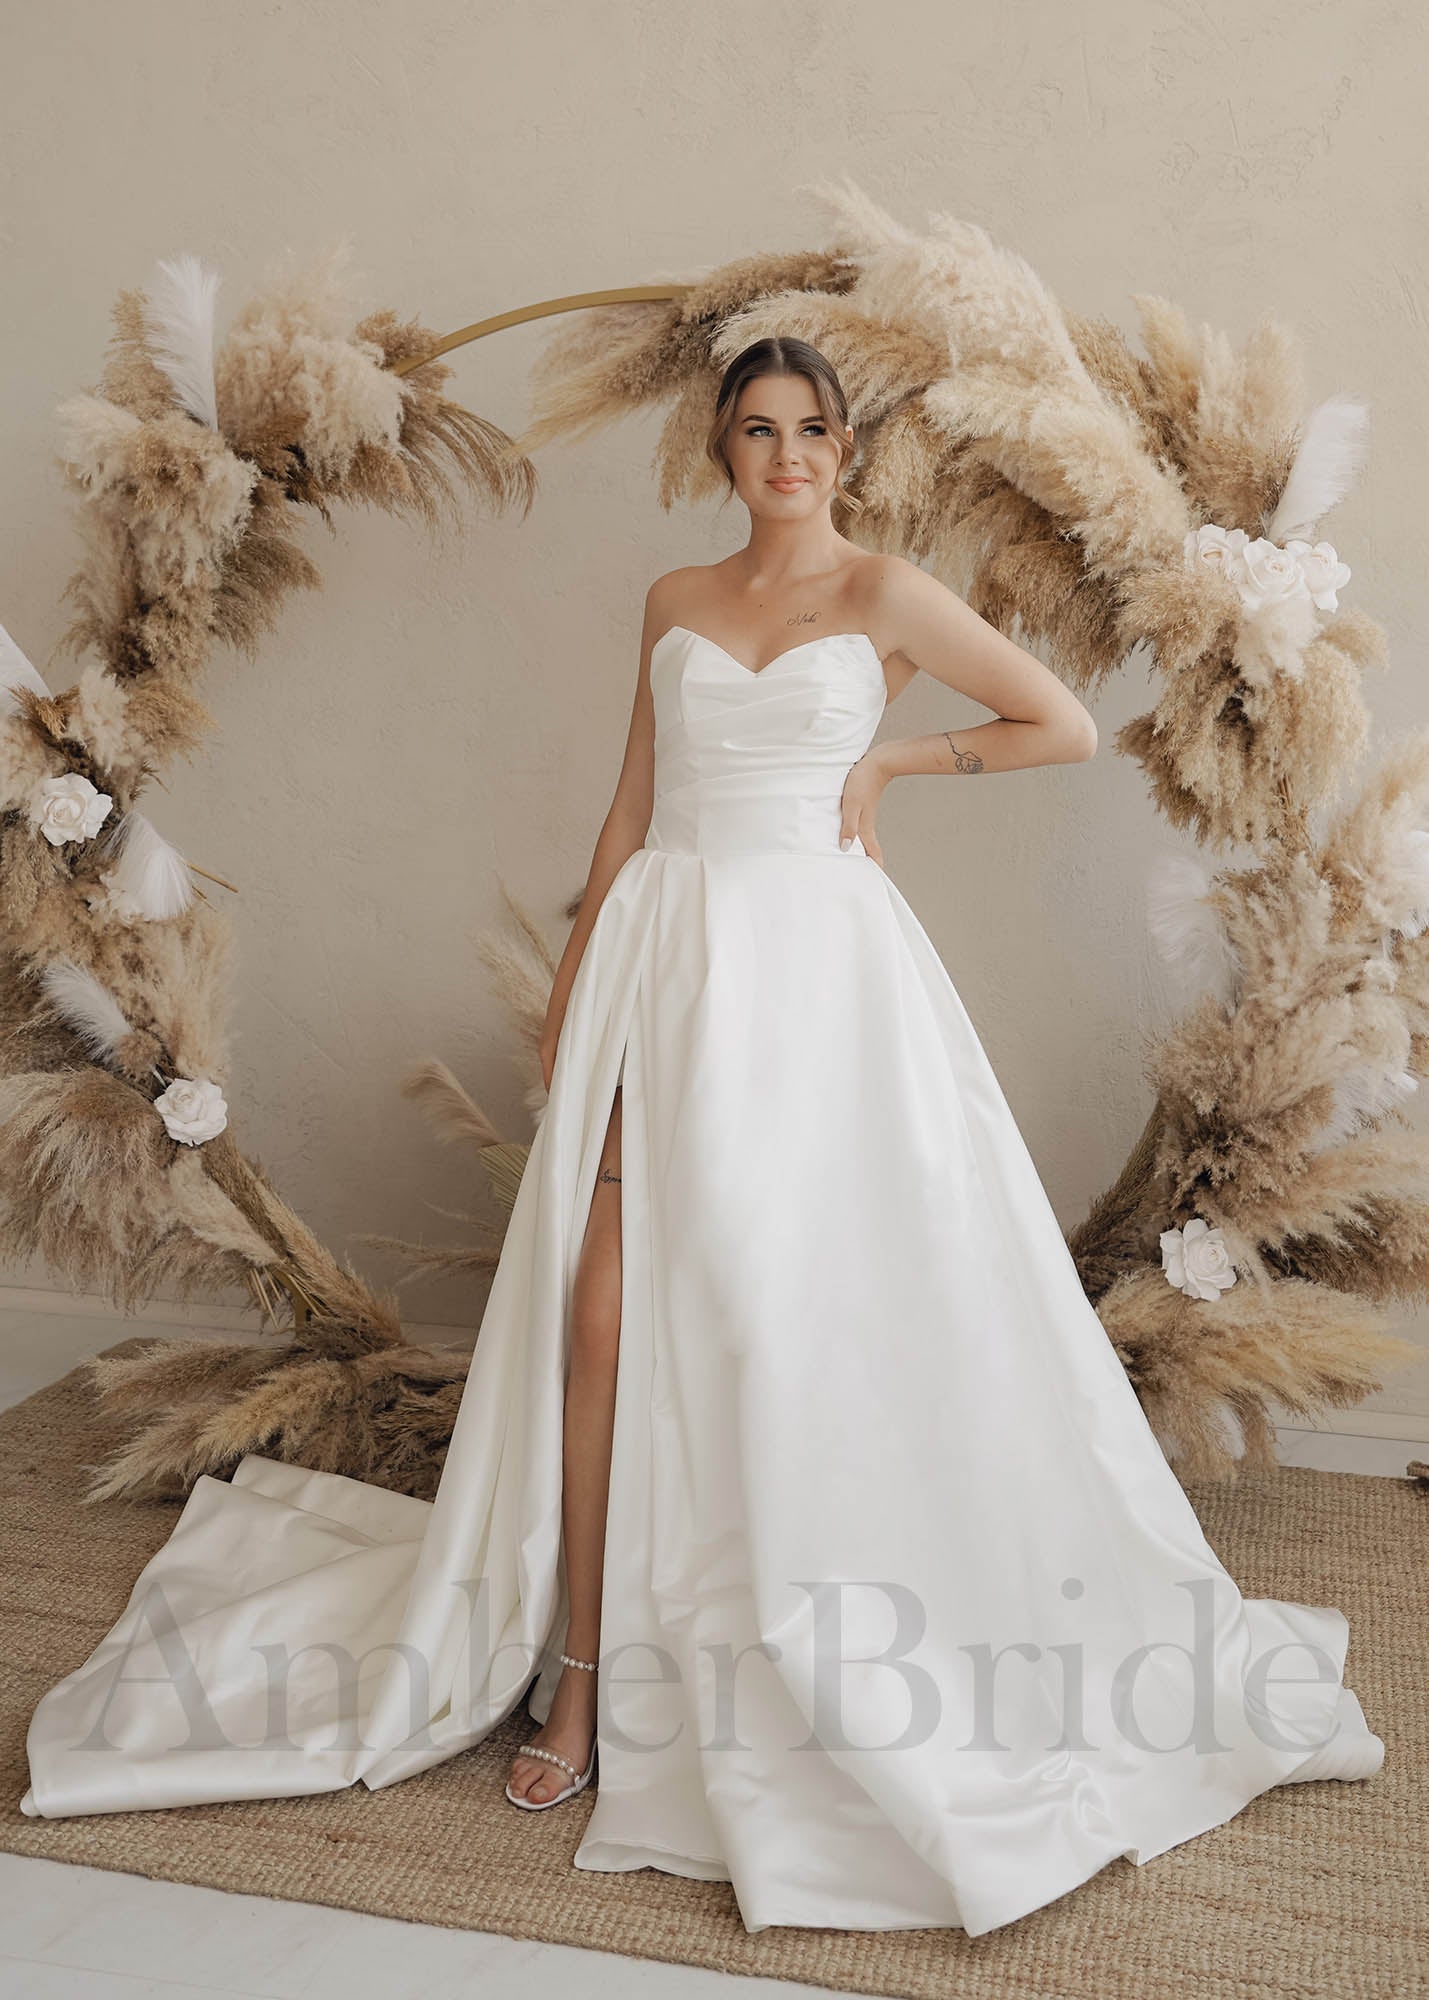 Strapless Wedding Dresses: Refined and Elegant Necklines